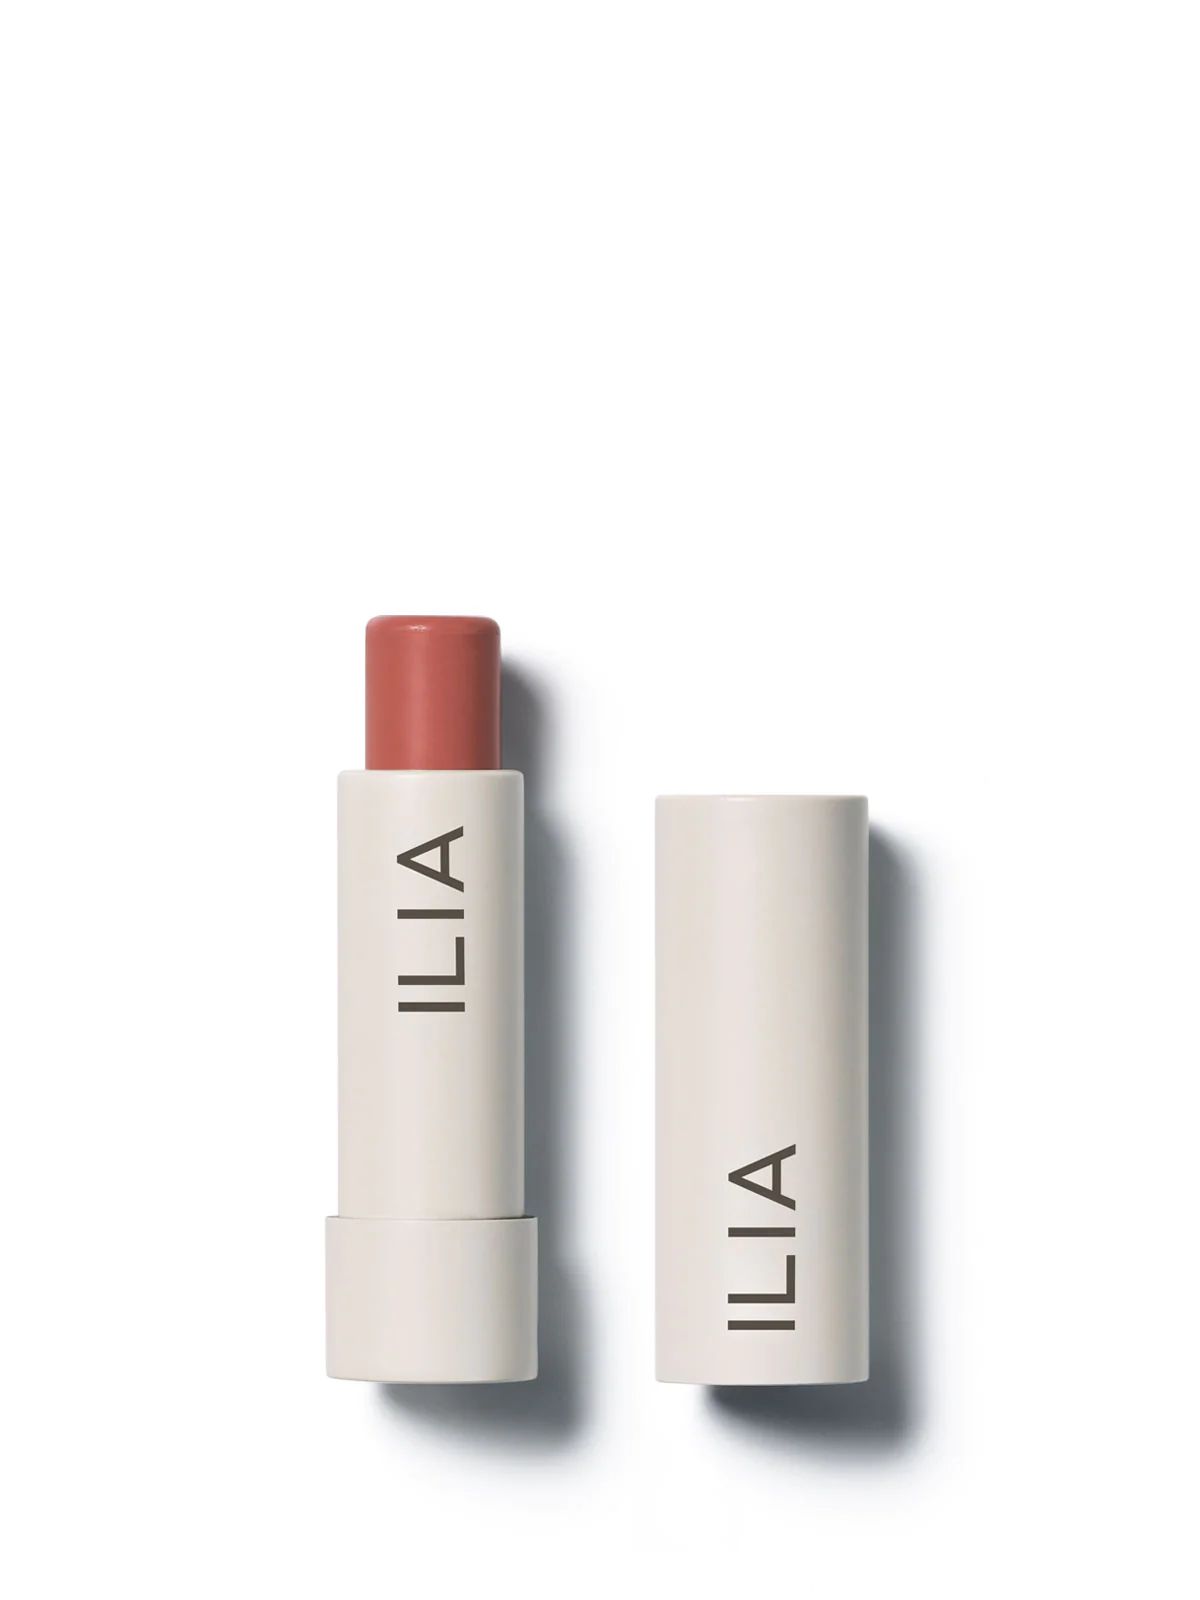 ILIA Balmy Tint: Warm Peachy Nude - Hydrating Lip Balm | ILIA Beauty